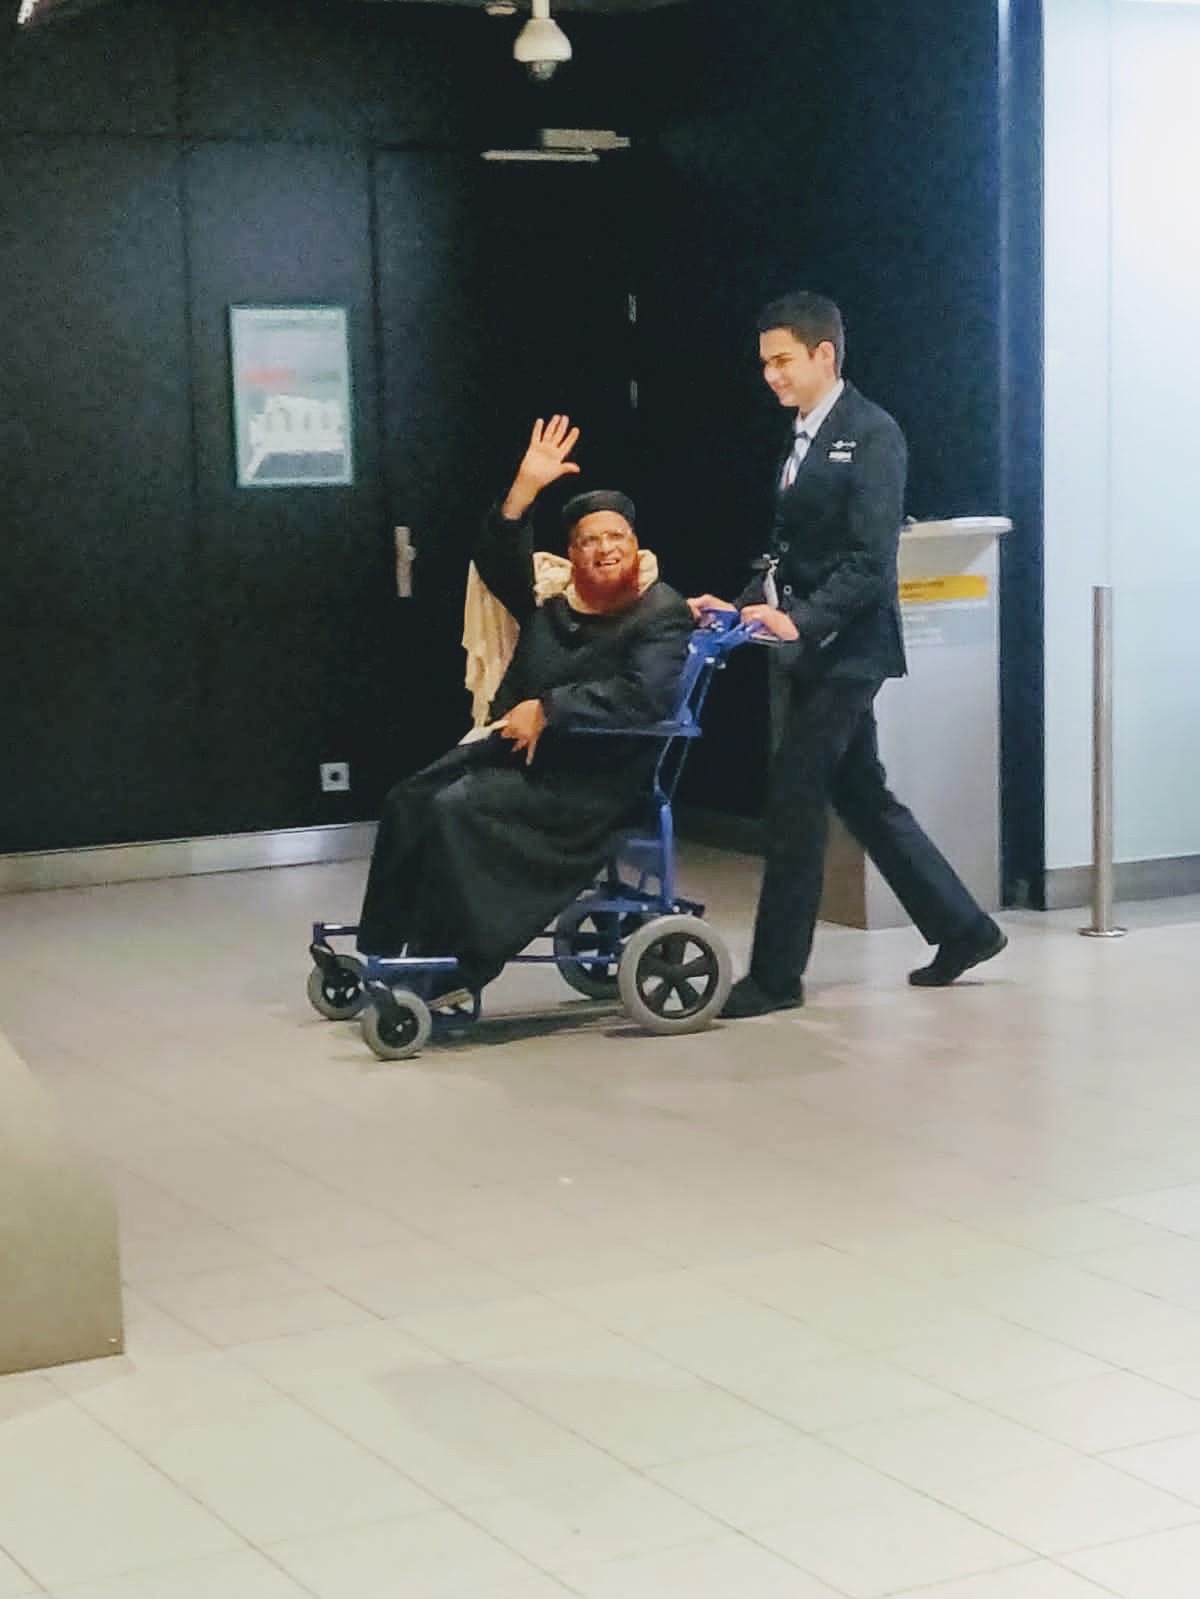 Shaykh bidding farewell at Amsterdam airport